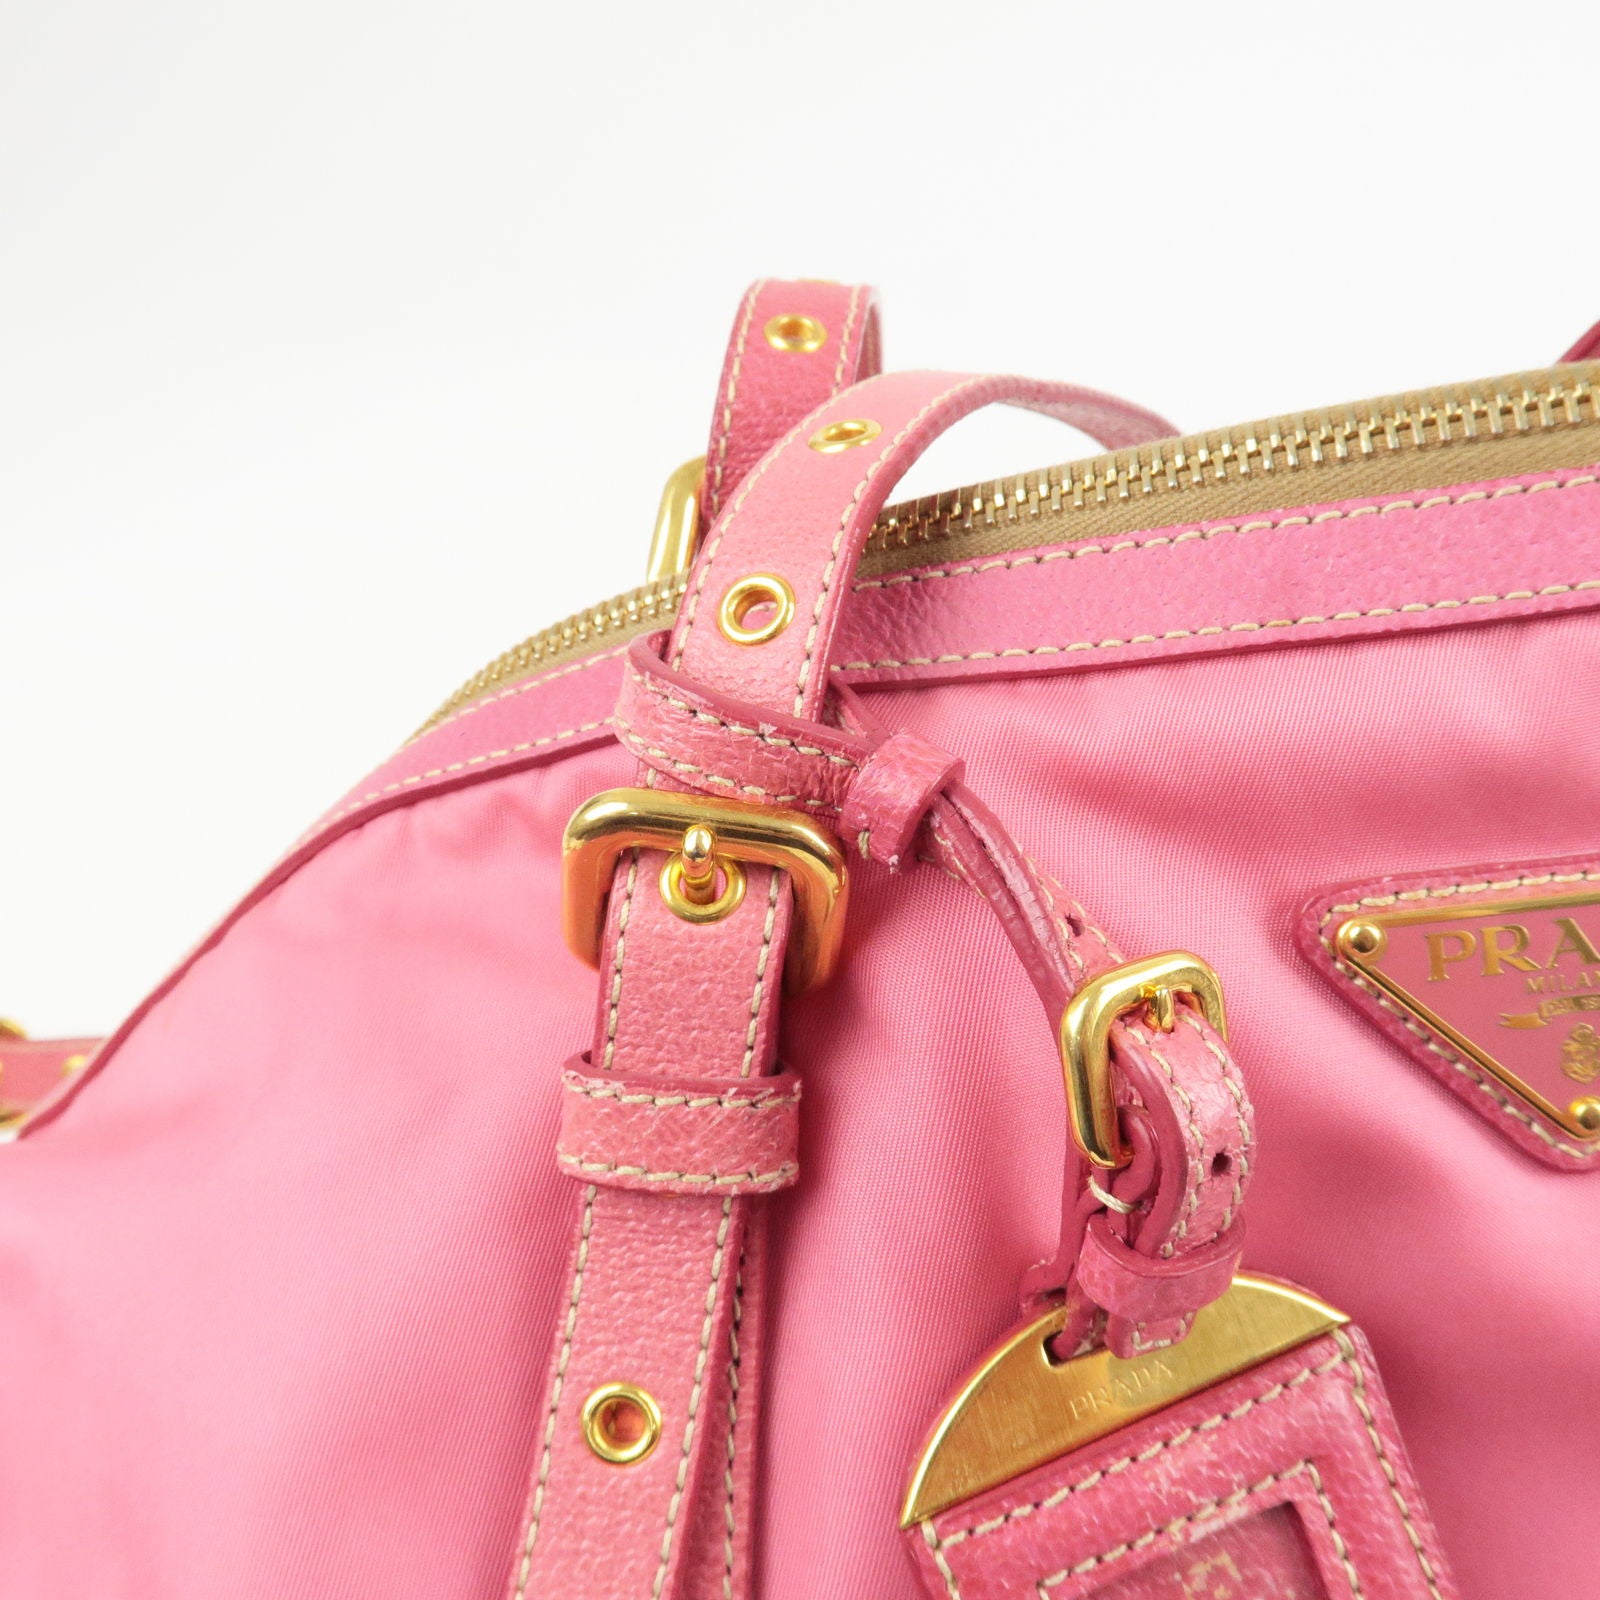 100% Authentic Prada Nylon Bag in Hot Pink 💞💖